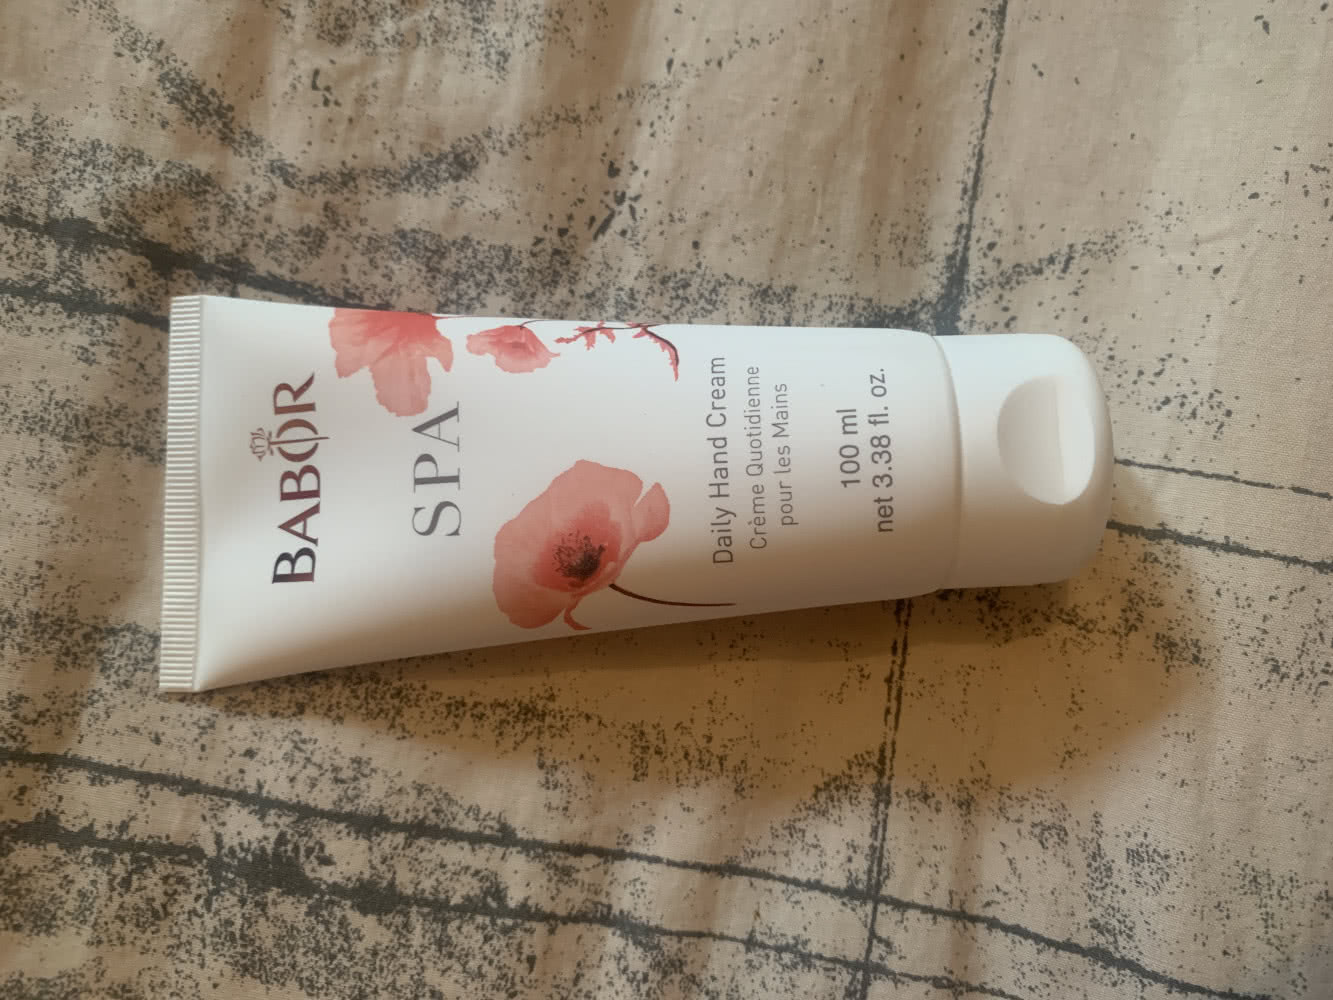 Babor, SPA Daily Hand Cream, 100ml